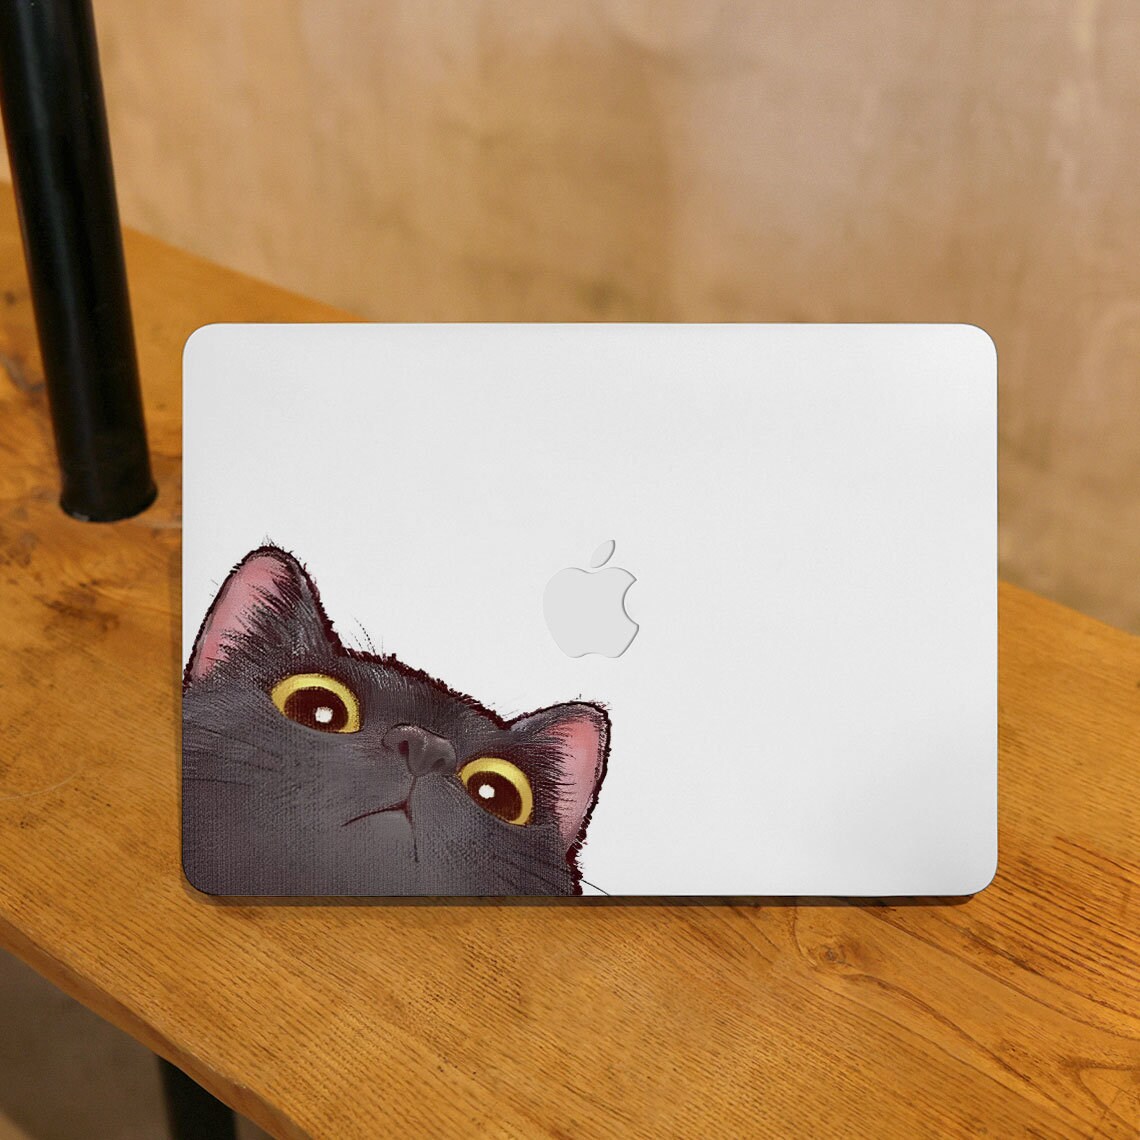  Laptop Case Cute Animal Cat Fish Laptops Sleeve